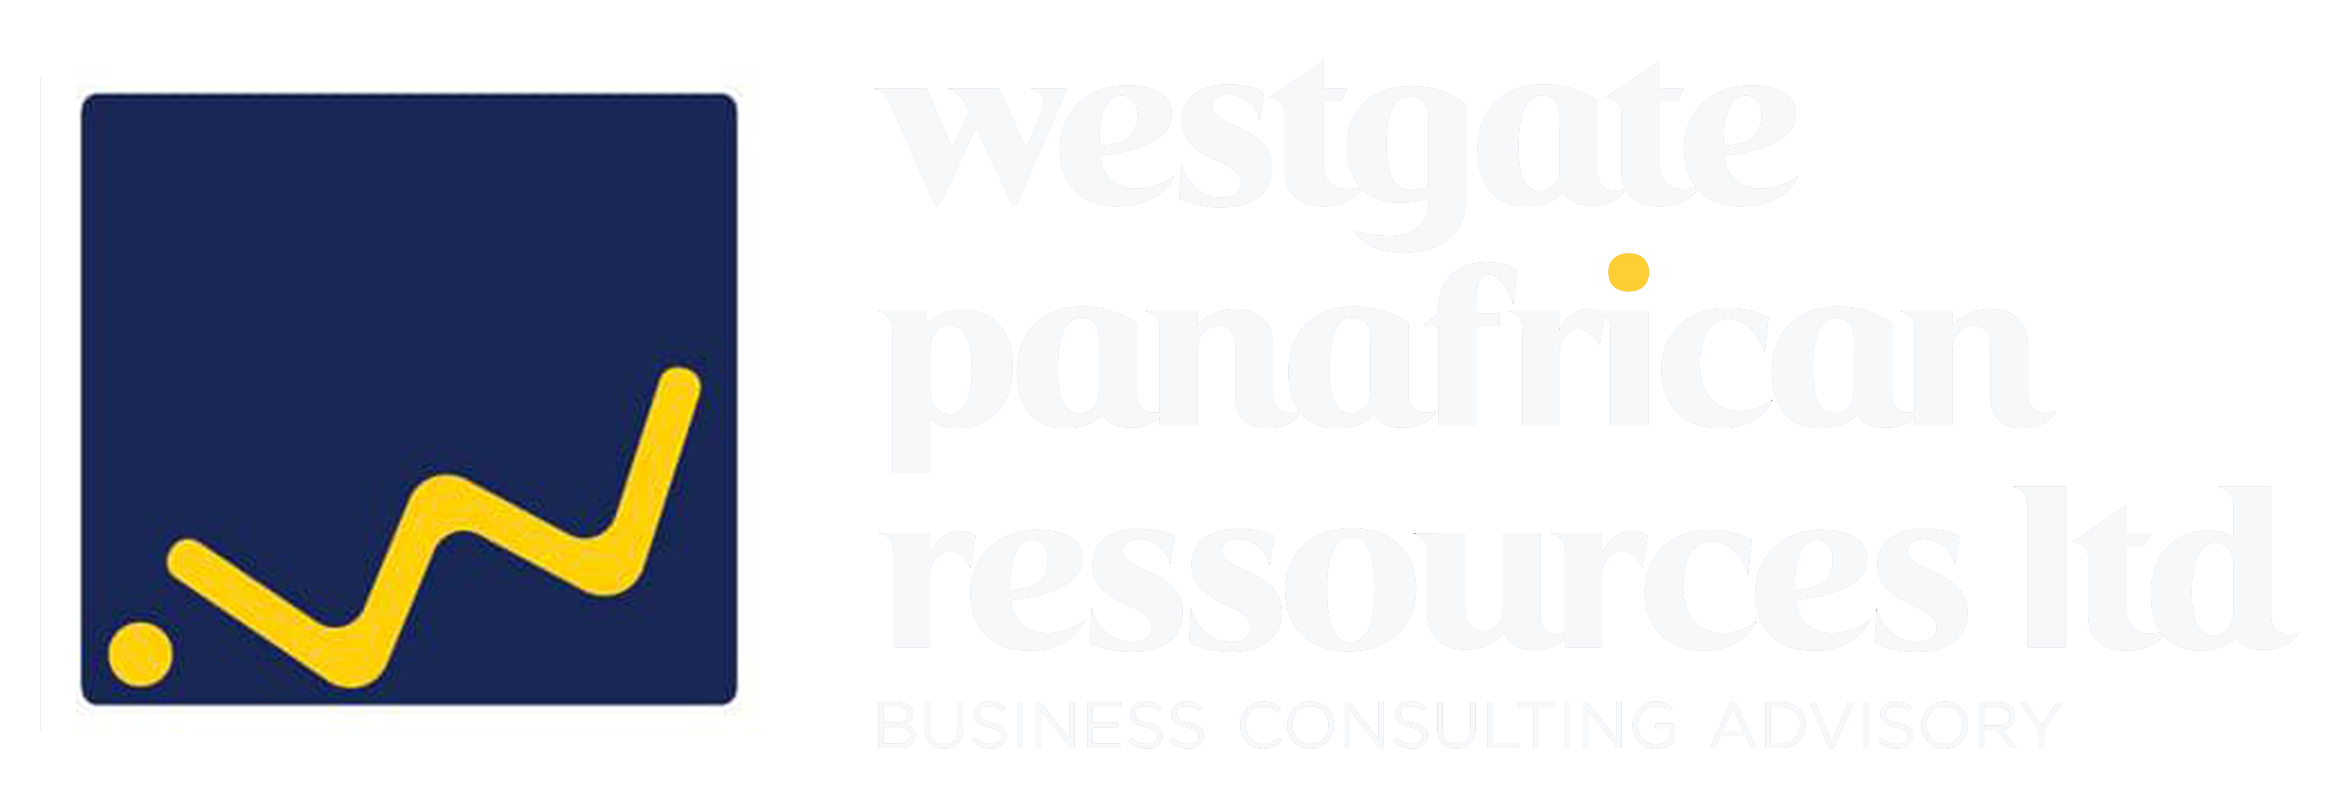 Westgate Panafrican Ressources LTD